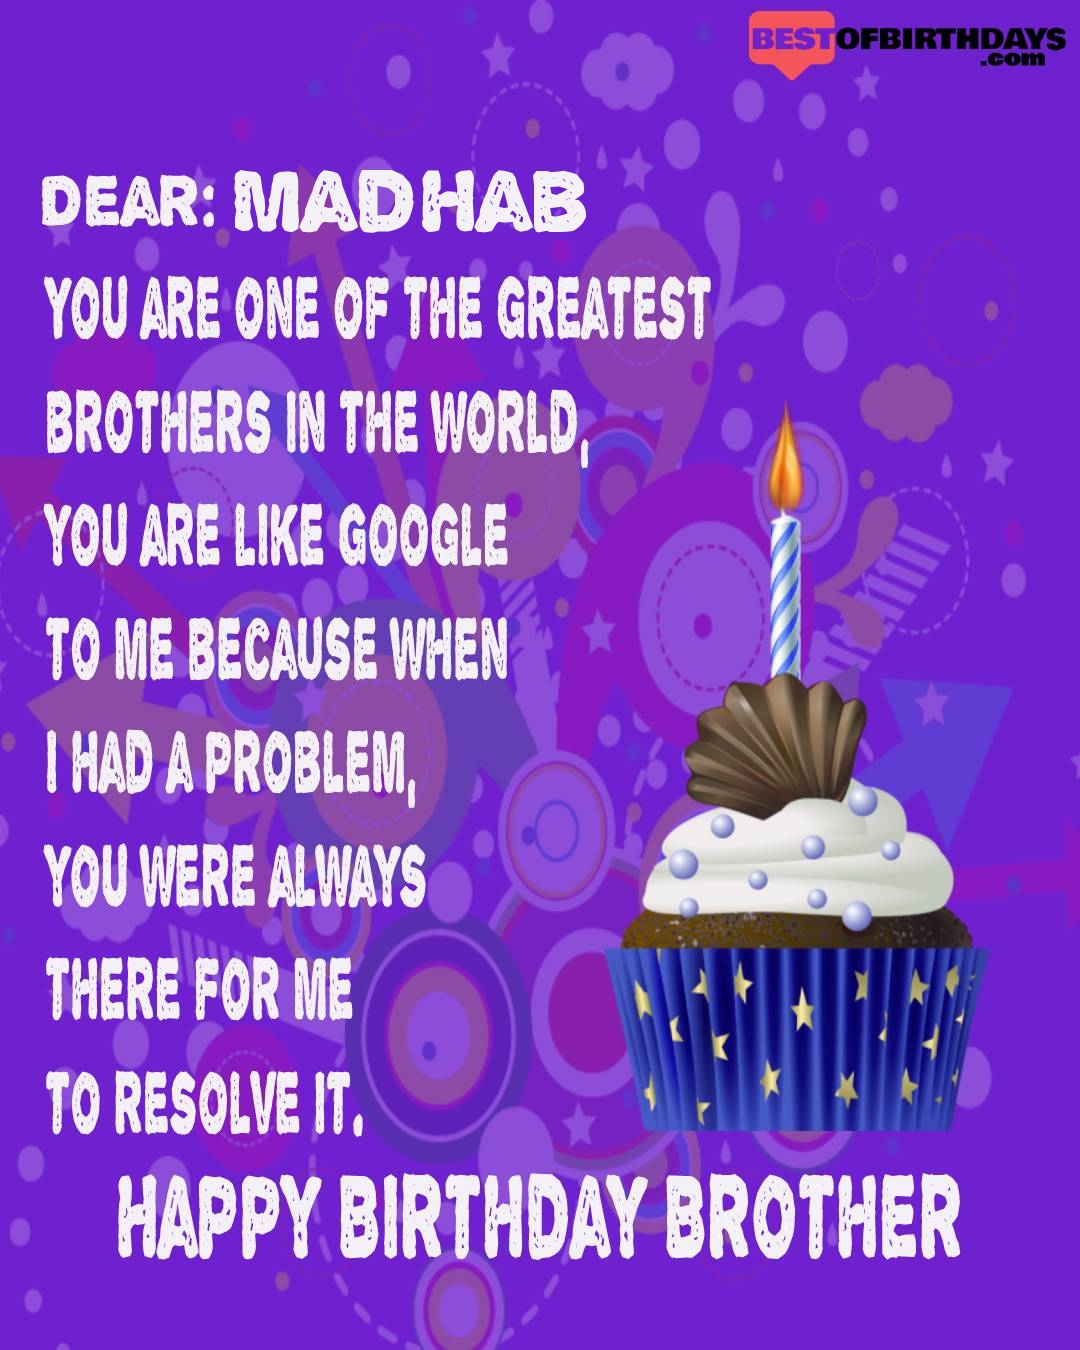 Happy birthday madhab bhai brother bro